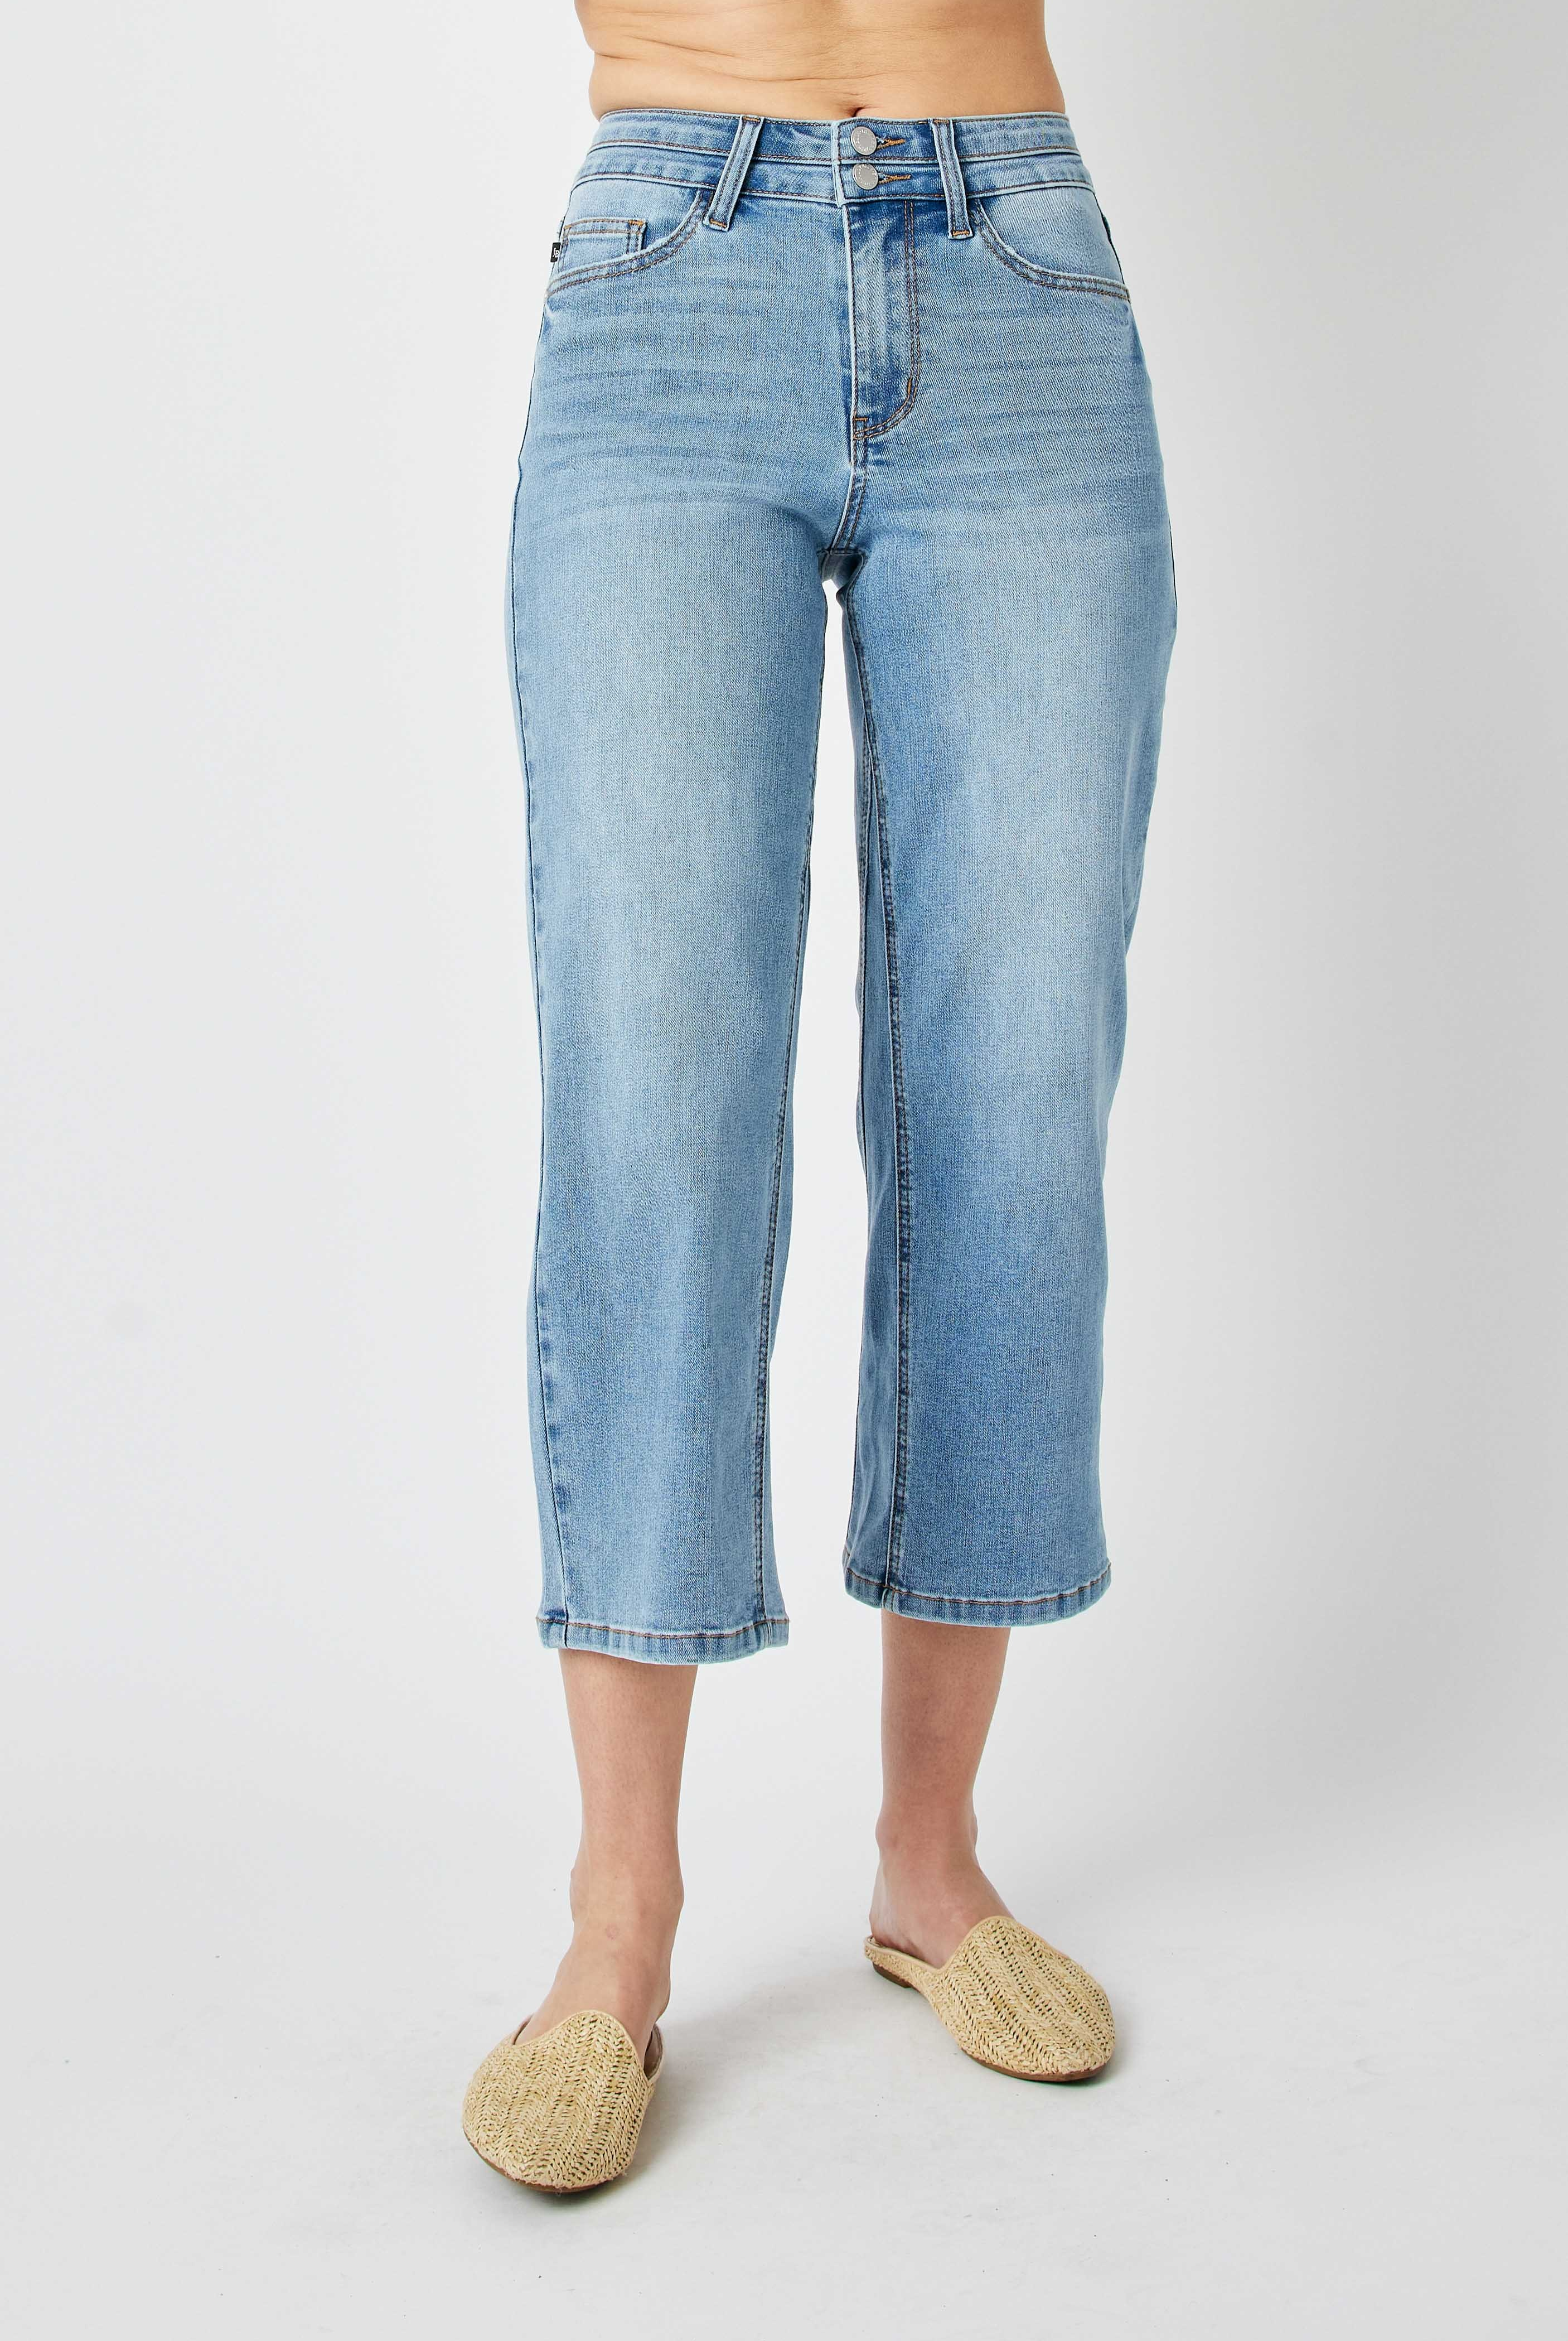 Judy Blue High Waist Wide Crop Jeans |Stuffology Boutique-Jeans-Judy Blue-Stuffology - Where Vintage Meets Modern, A Boutique for Real Women in Crosbyton, TX